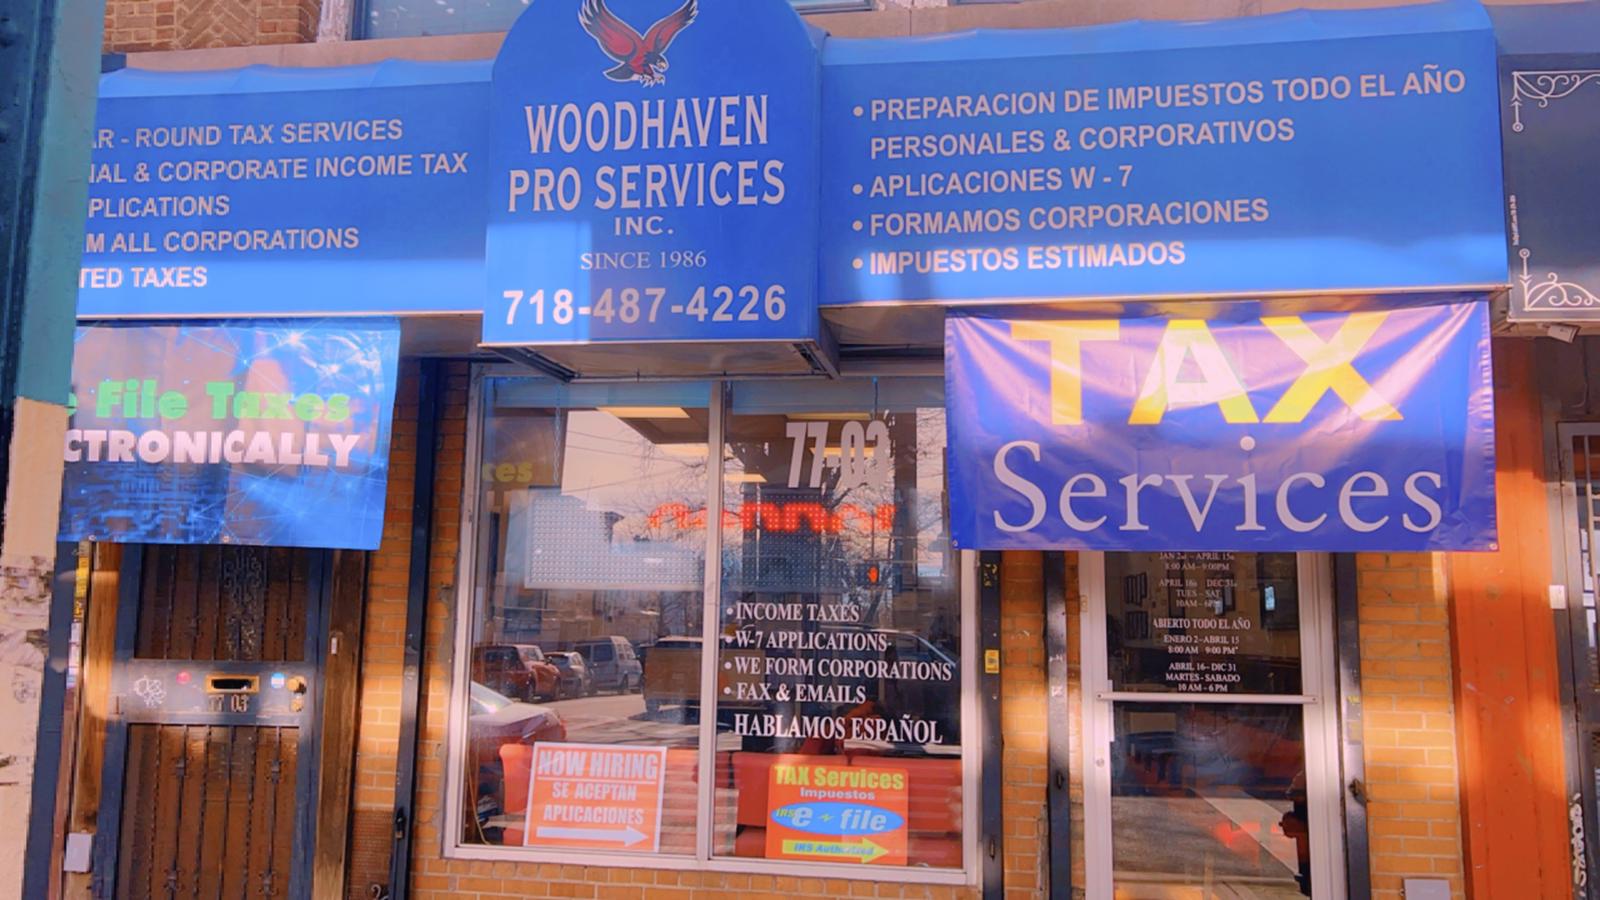 Woodhaven Pro Service Inc.